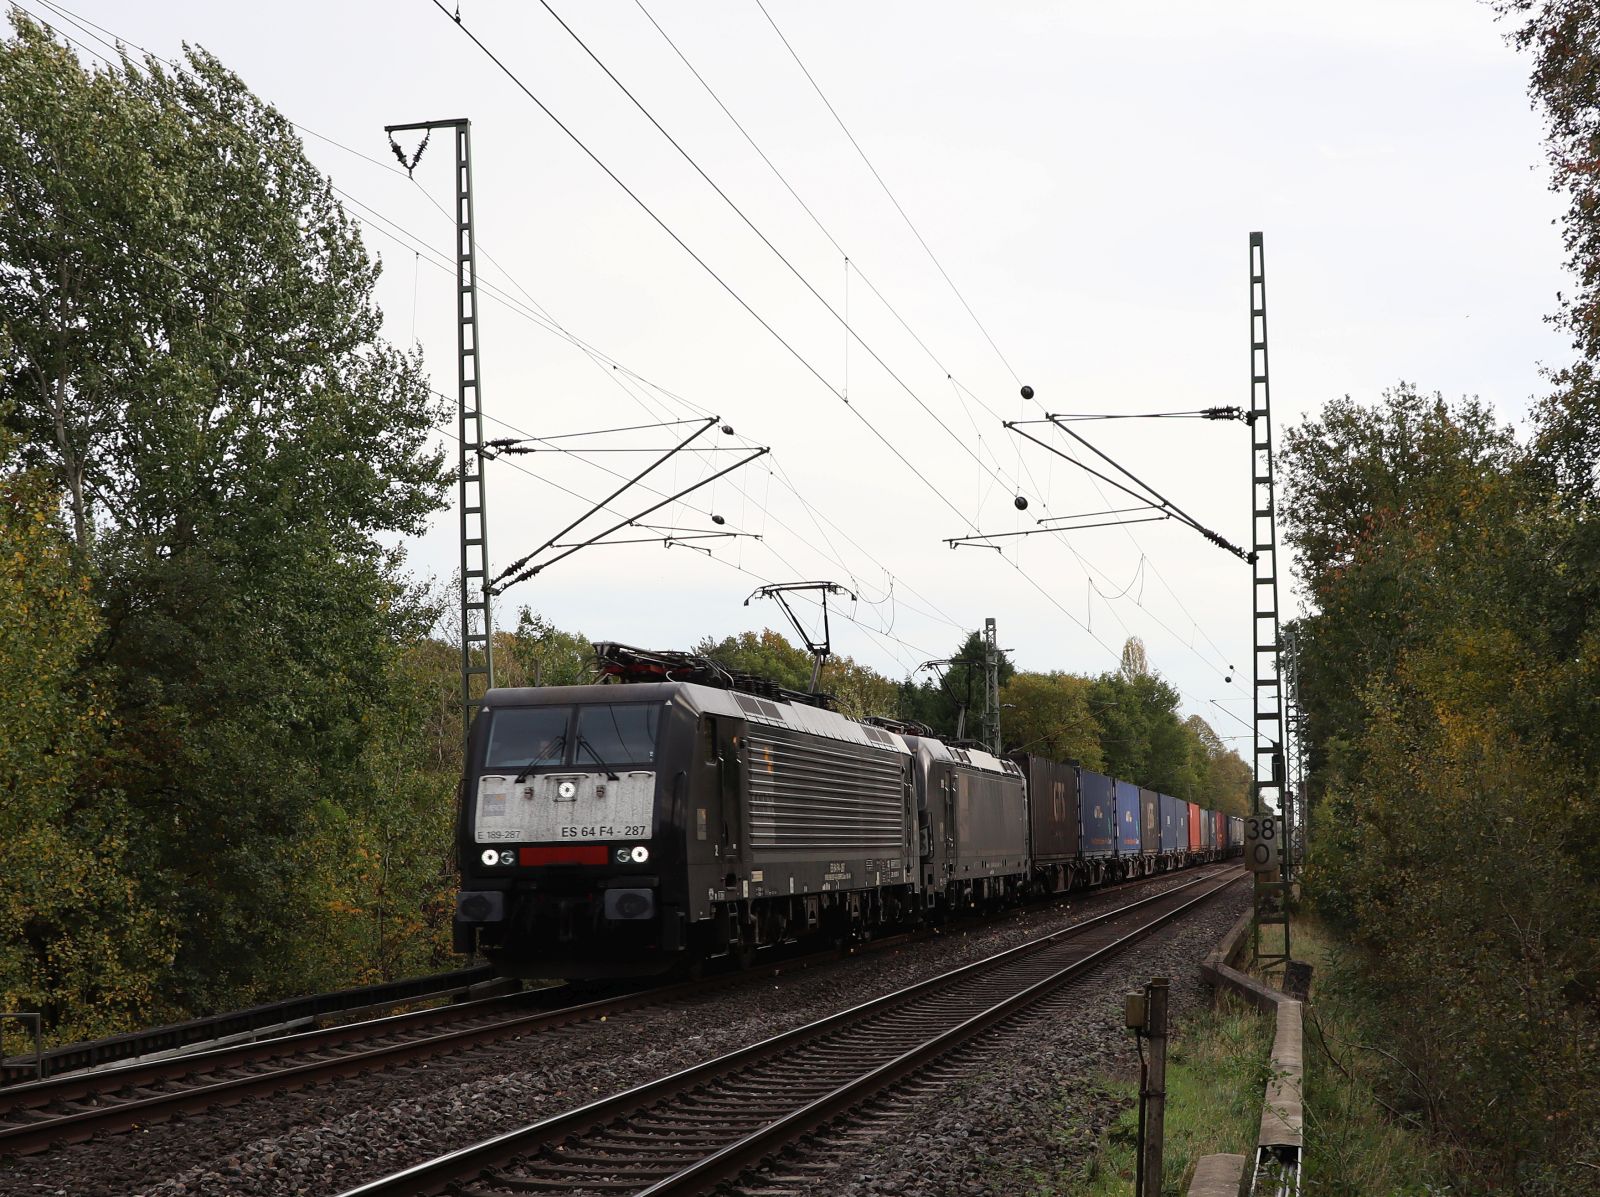 MRCE (Mitsui Rail Capital Europe) Lokomotive 189 287-6 (91 80 6189 287-6 D-DISPO) Grenzweg, Hamminkeln 03-11-2022.

MRCE (Mitsui Rail Capital Europe) locomotief 189 287-6 (91 80 6189 287-6 D-DISPO) Grenzweg, Hamminkeln 03-11-2022.